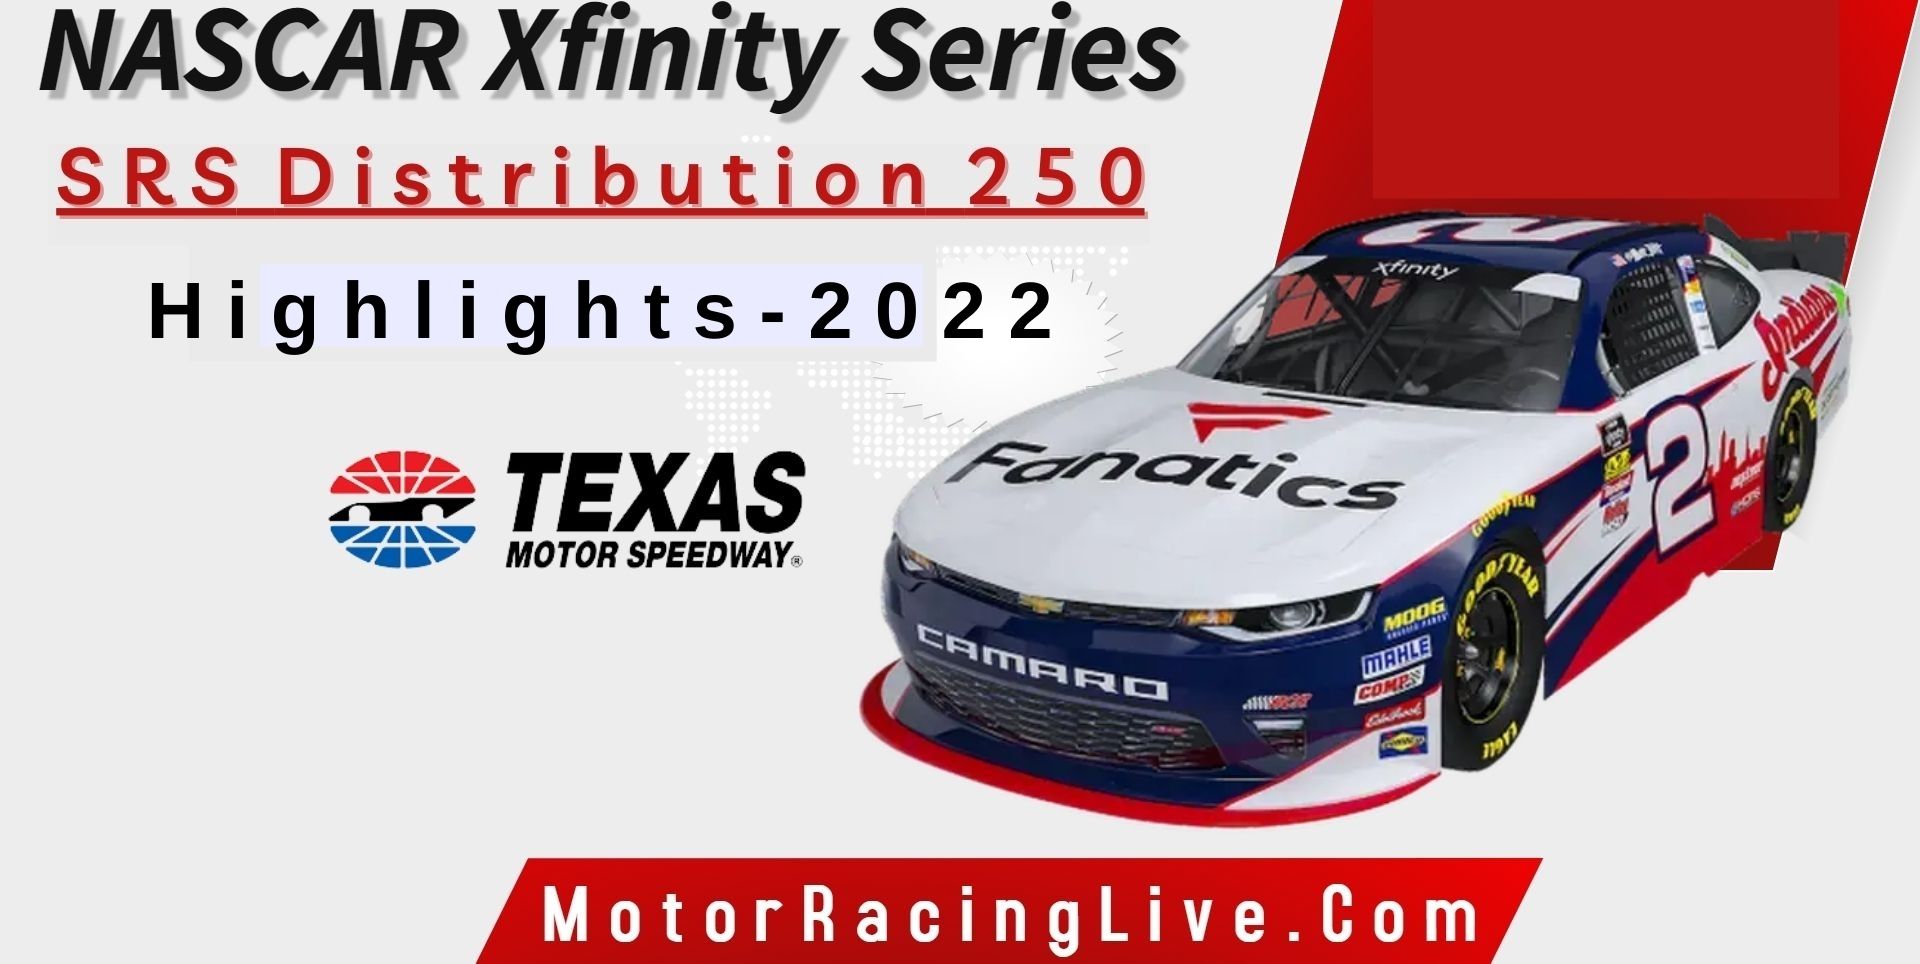 SRS Distribution 250 Highlights 2022 NASCAR Xfinity